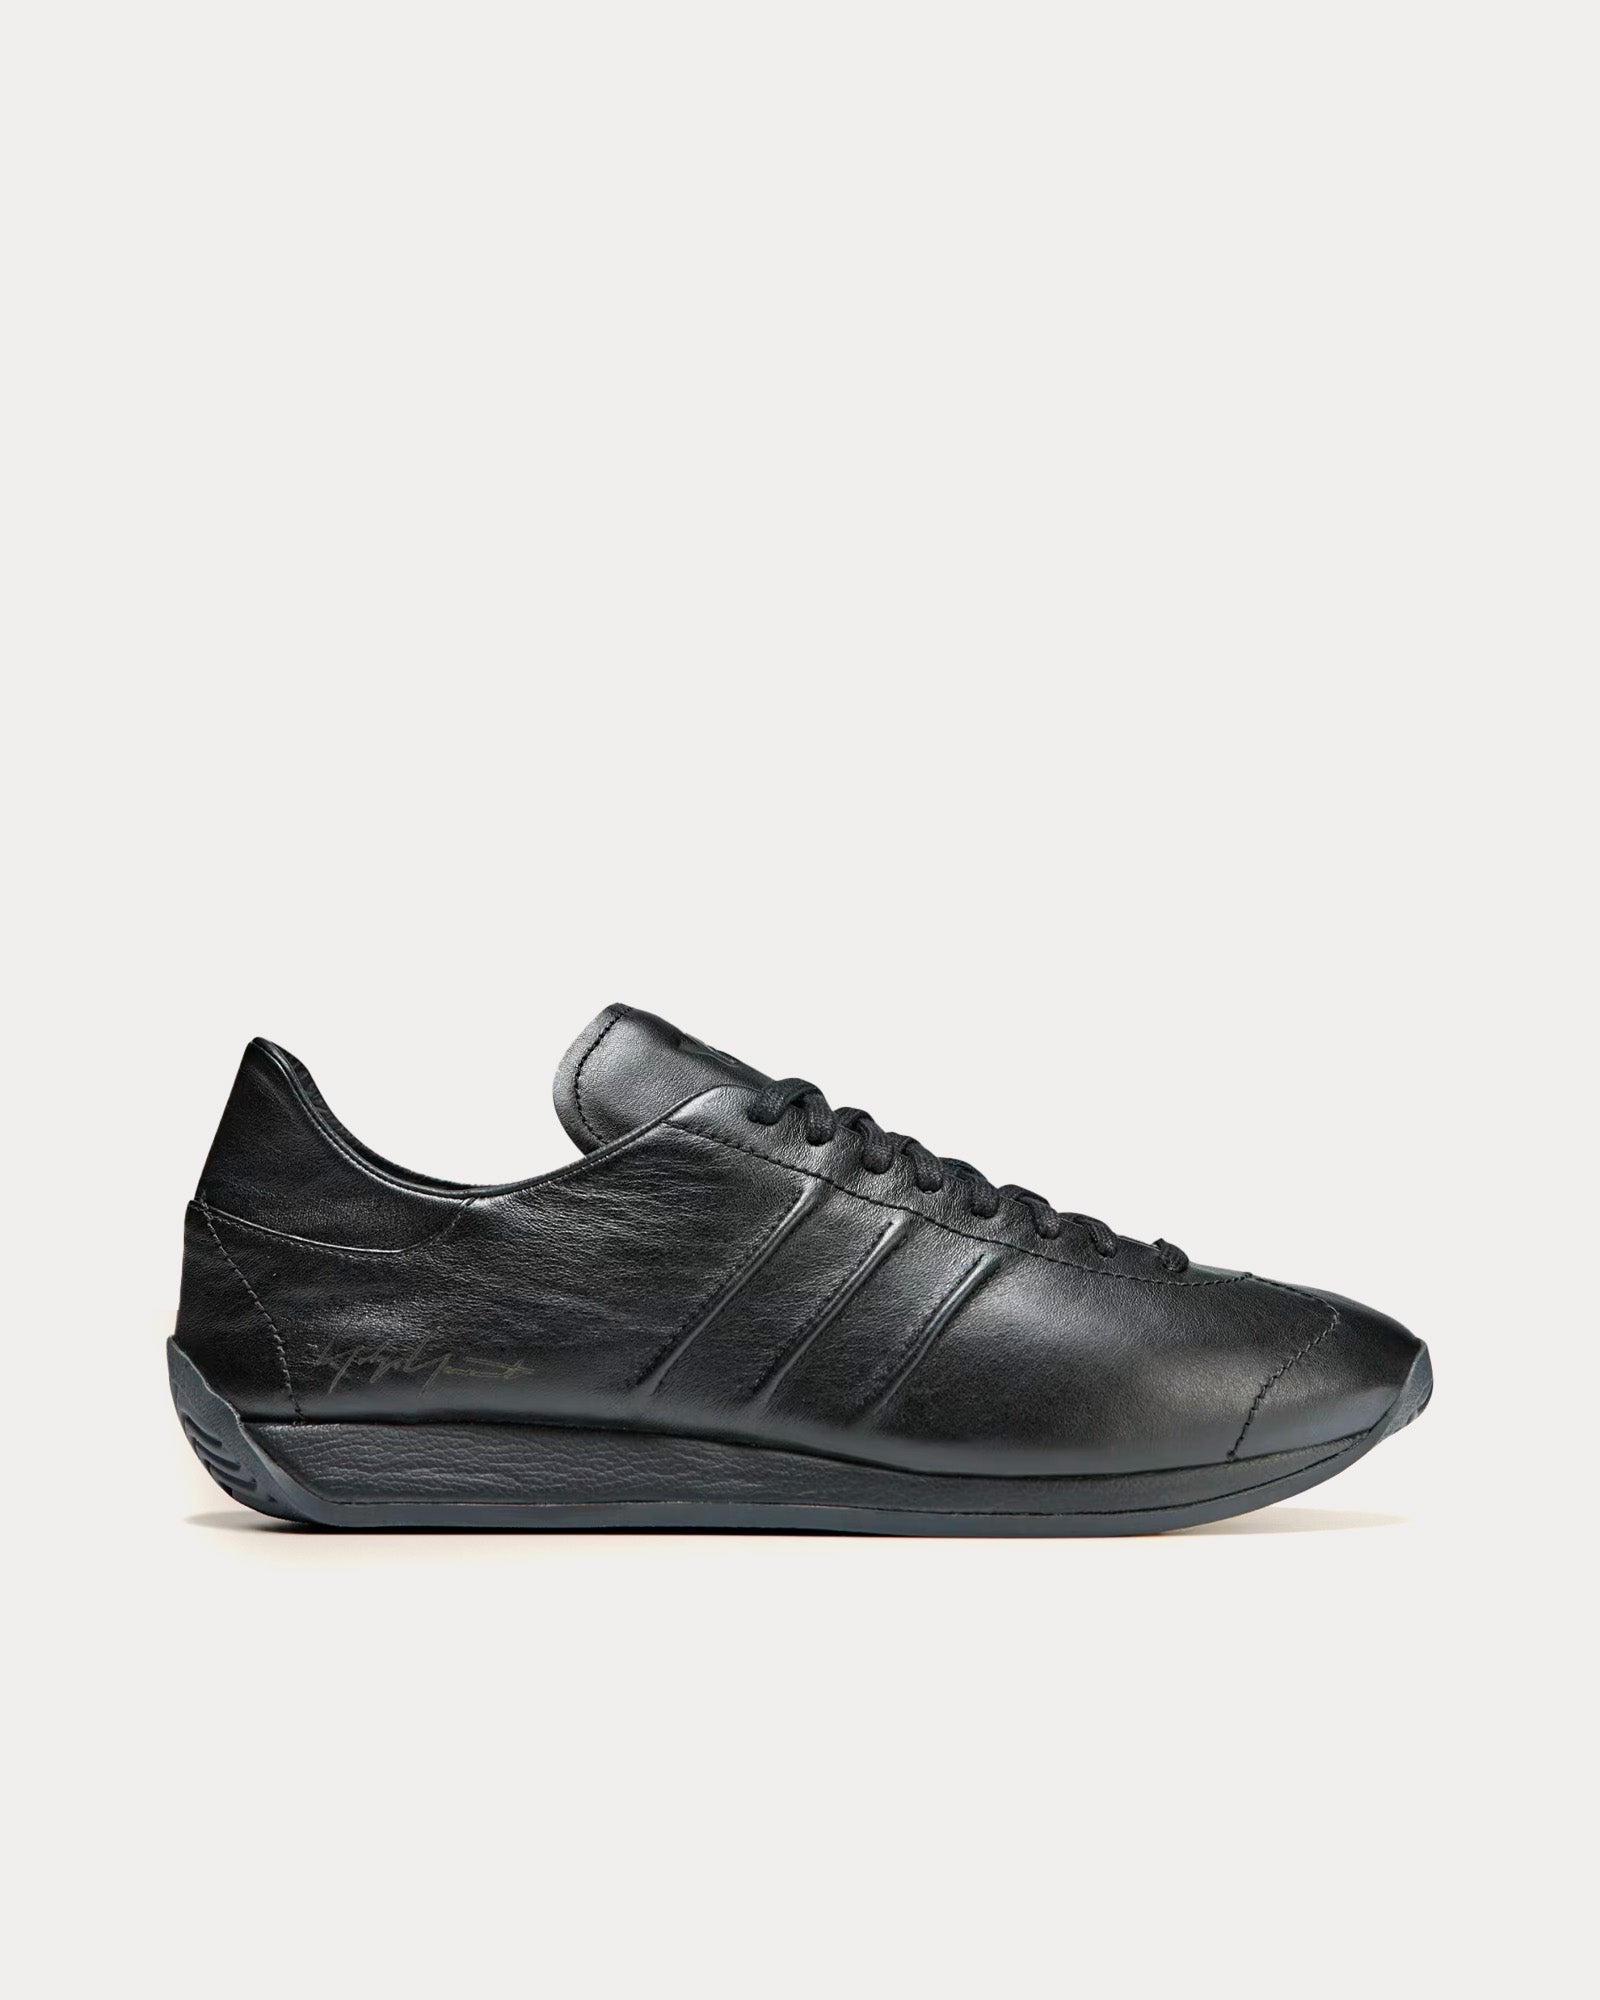 Y-3 - Country Leather Black / Black / Black Low Top Sneakers